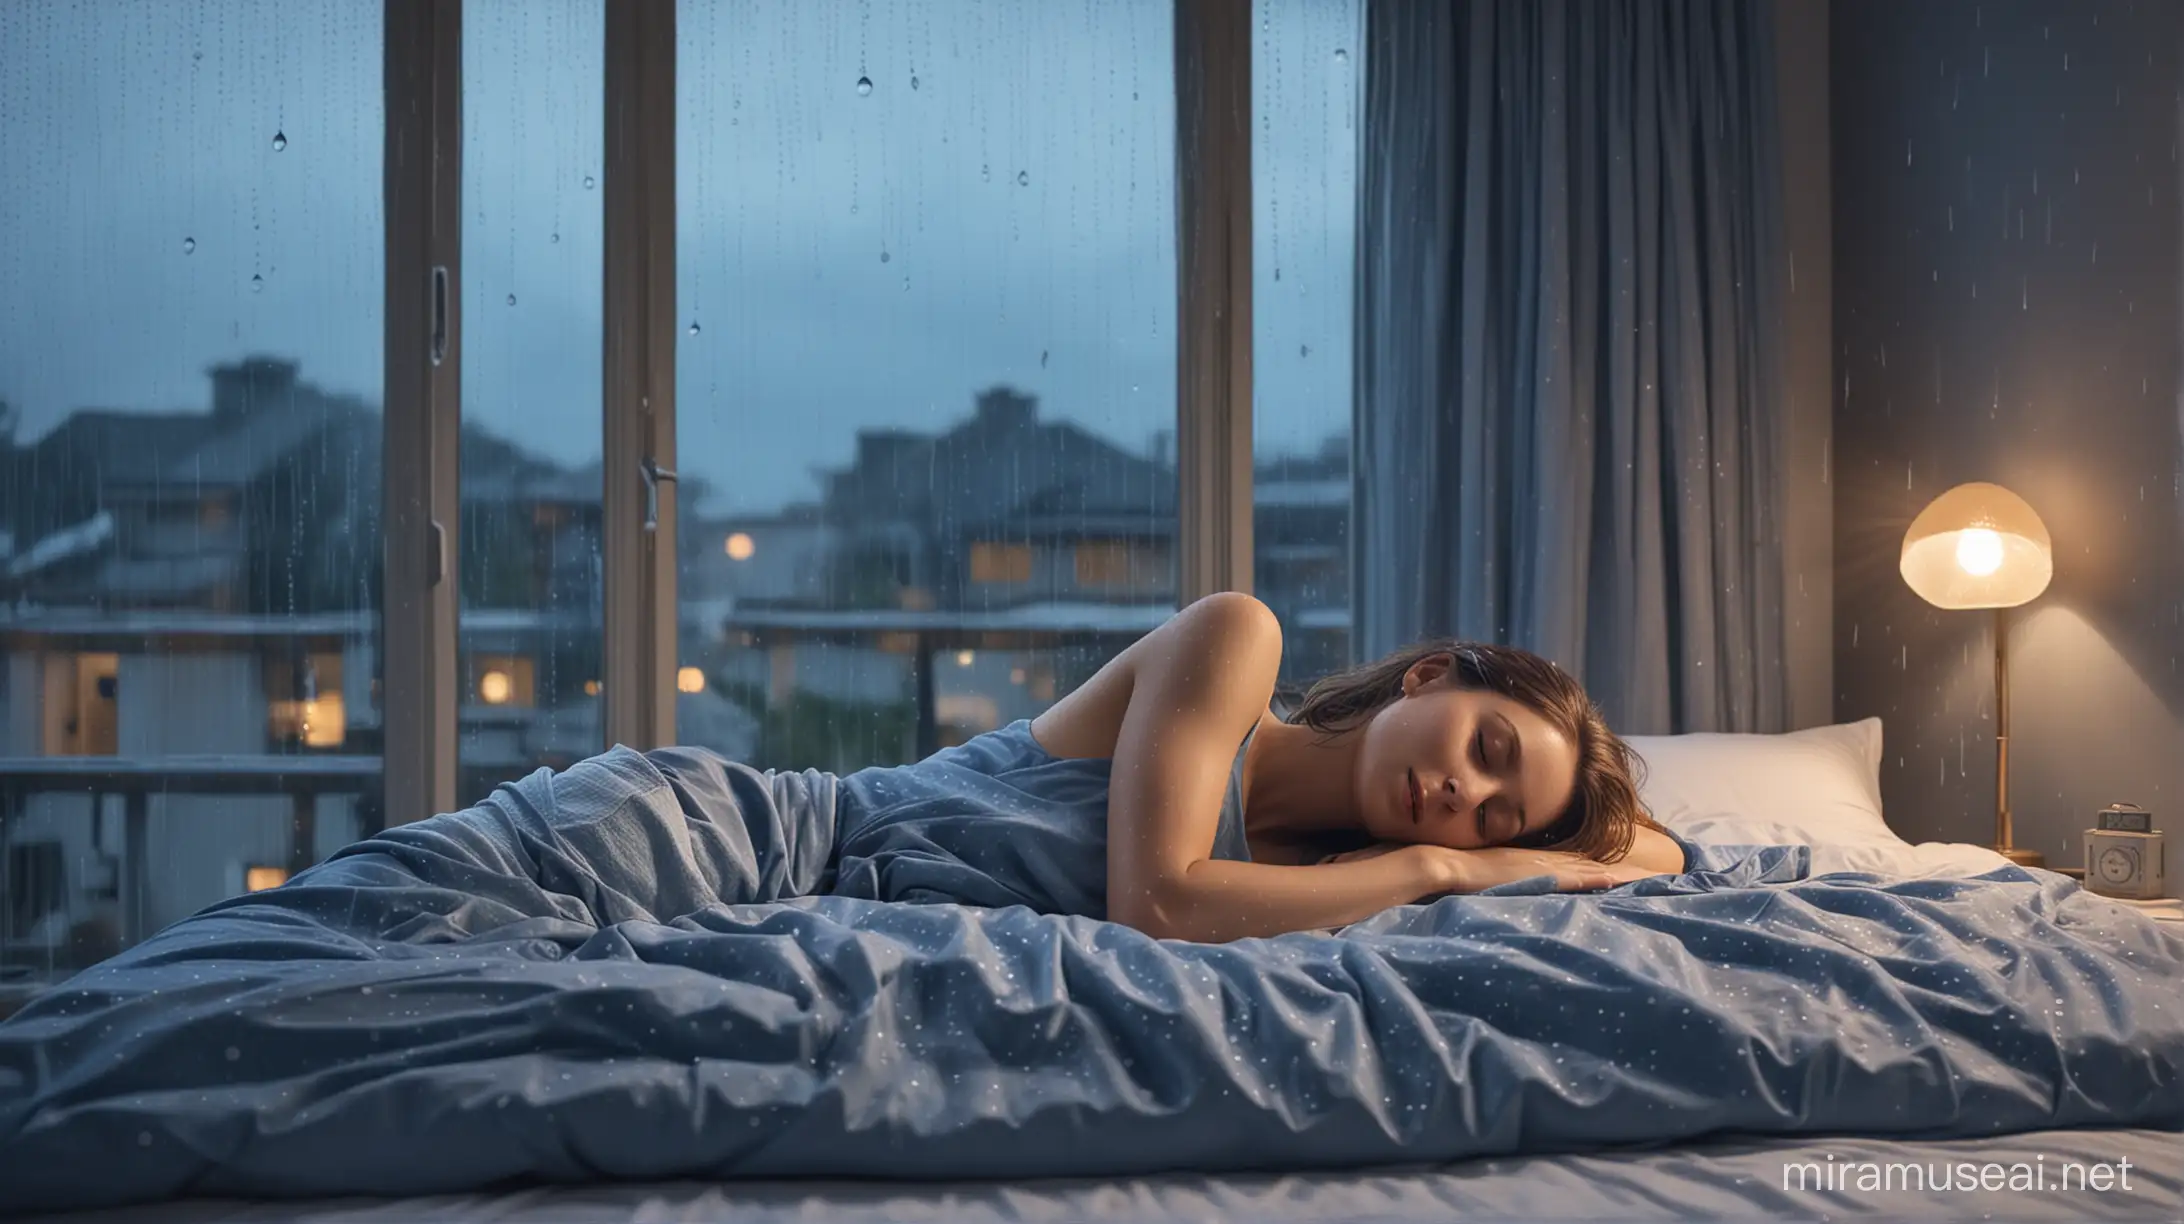 wanita cantik tertidur di  atas kasur dekat jendela rumah hujan rintik di luar rumah dengan Palet warna ruangan terdiri dari warna kebiruan dan hangat serta dingin diluar, dengan pencahayaan lembut dari berbagai lampu menambah suasana nyaman